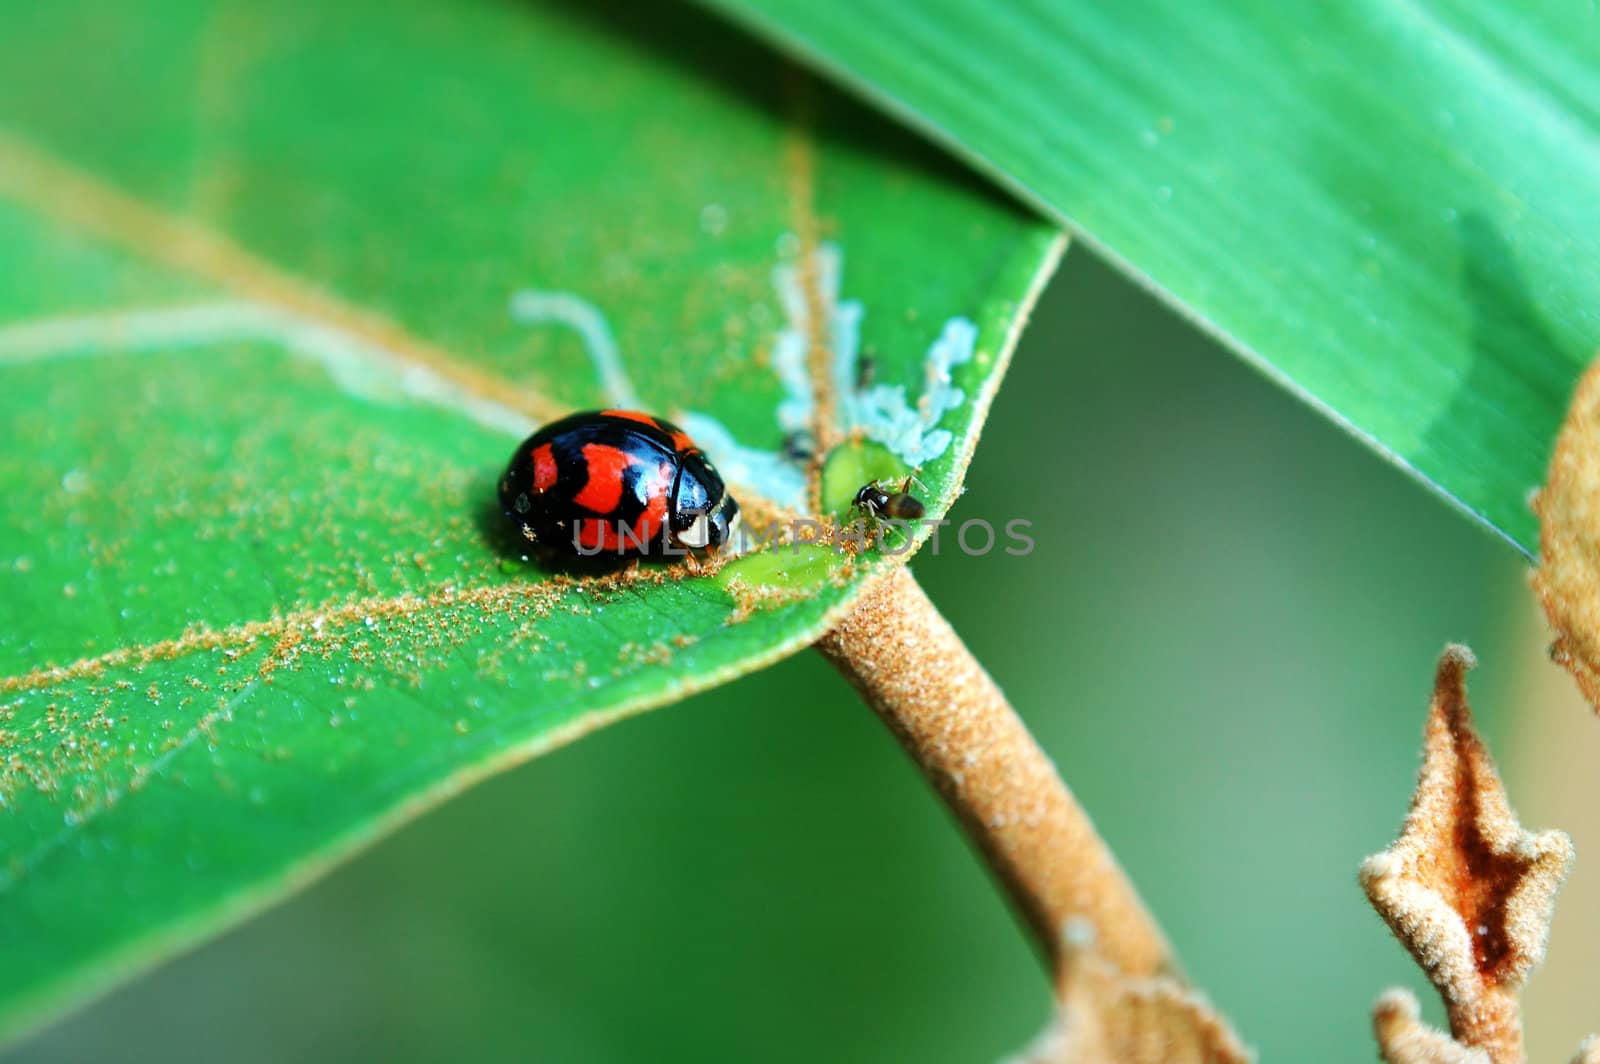 Scene of ladybird resting on a green leaf